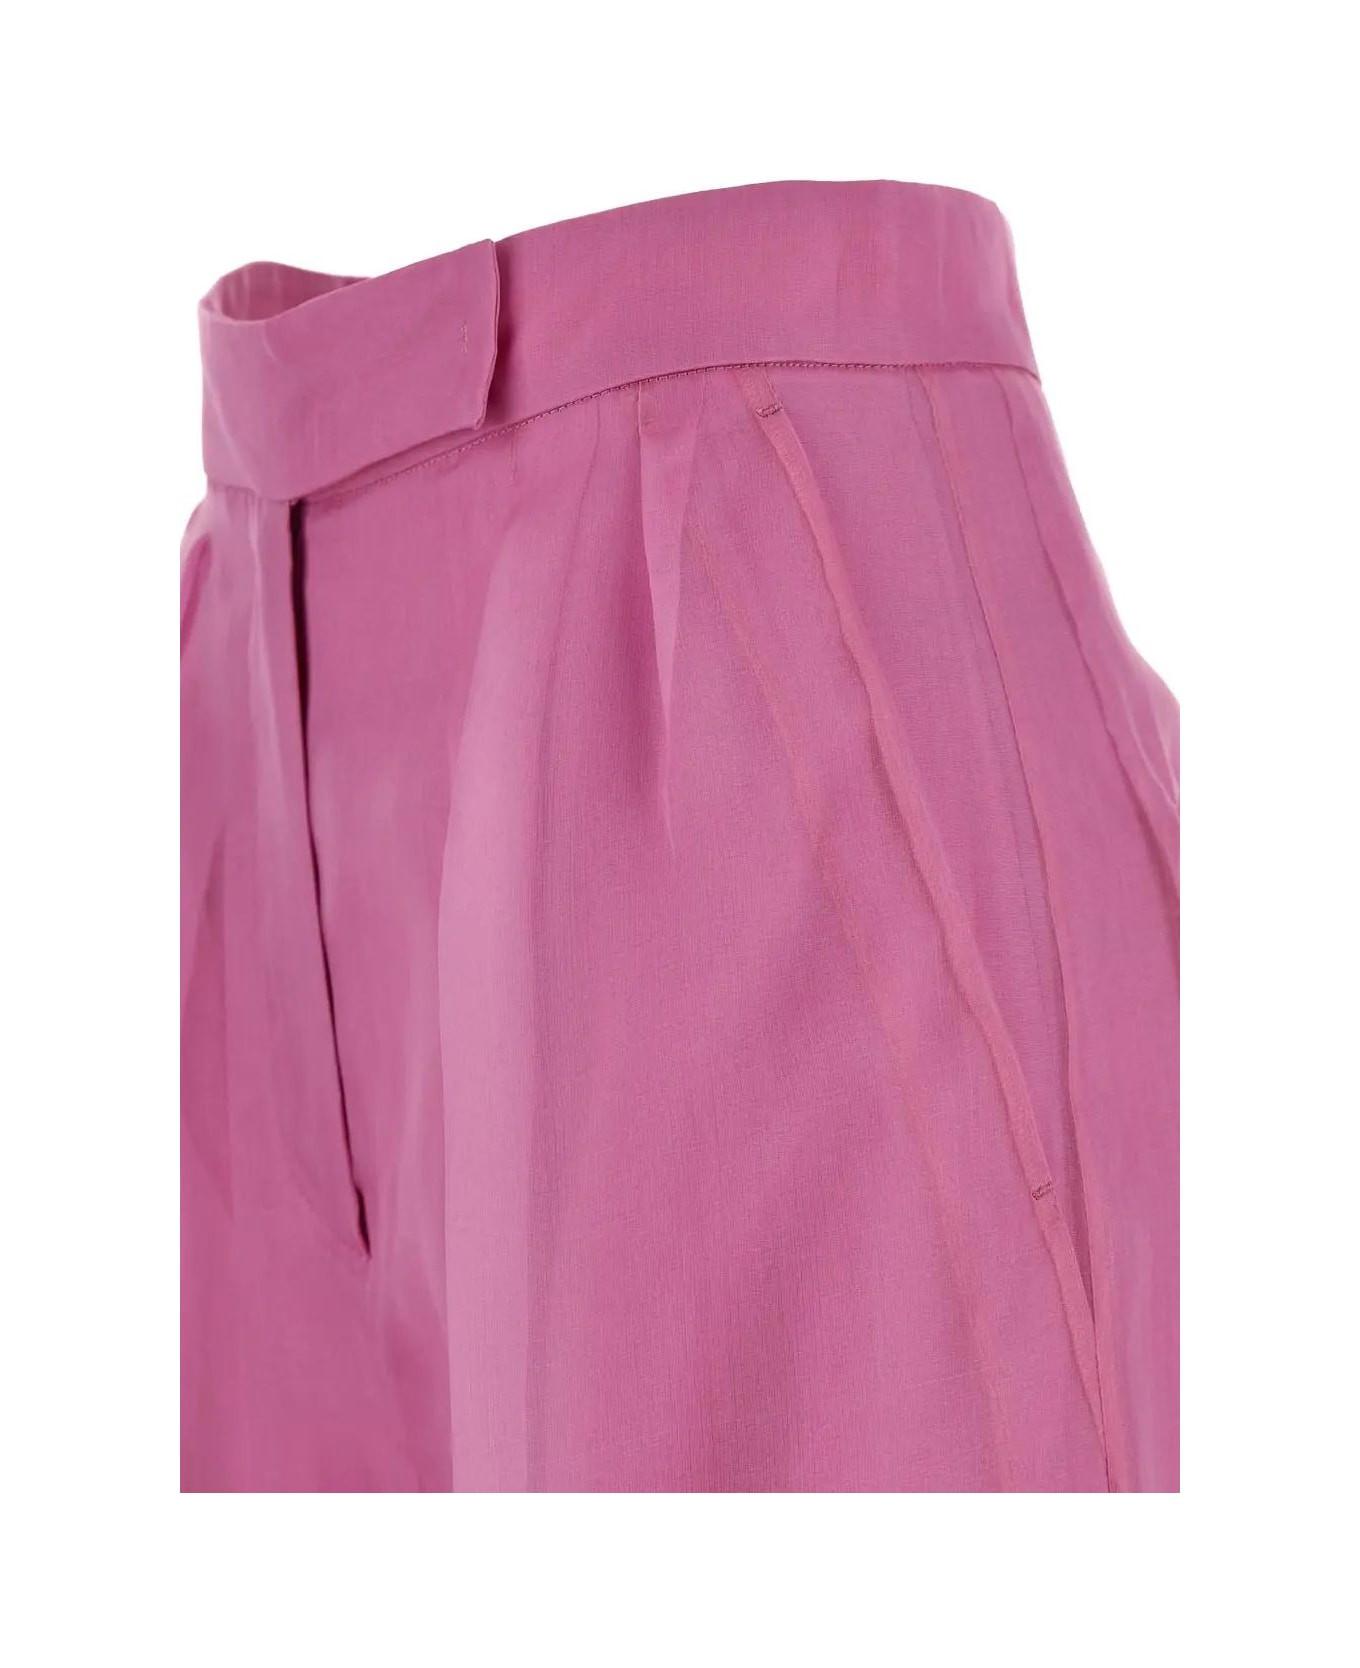 Max Mara Pianoforte Calibri Trousers - Pink ボトムス